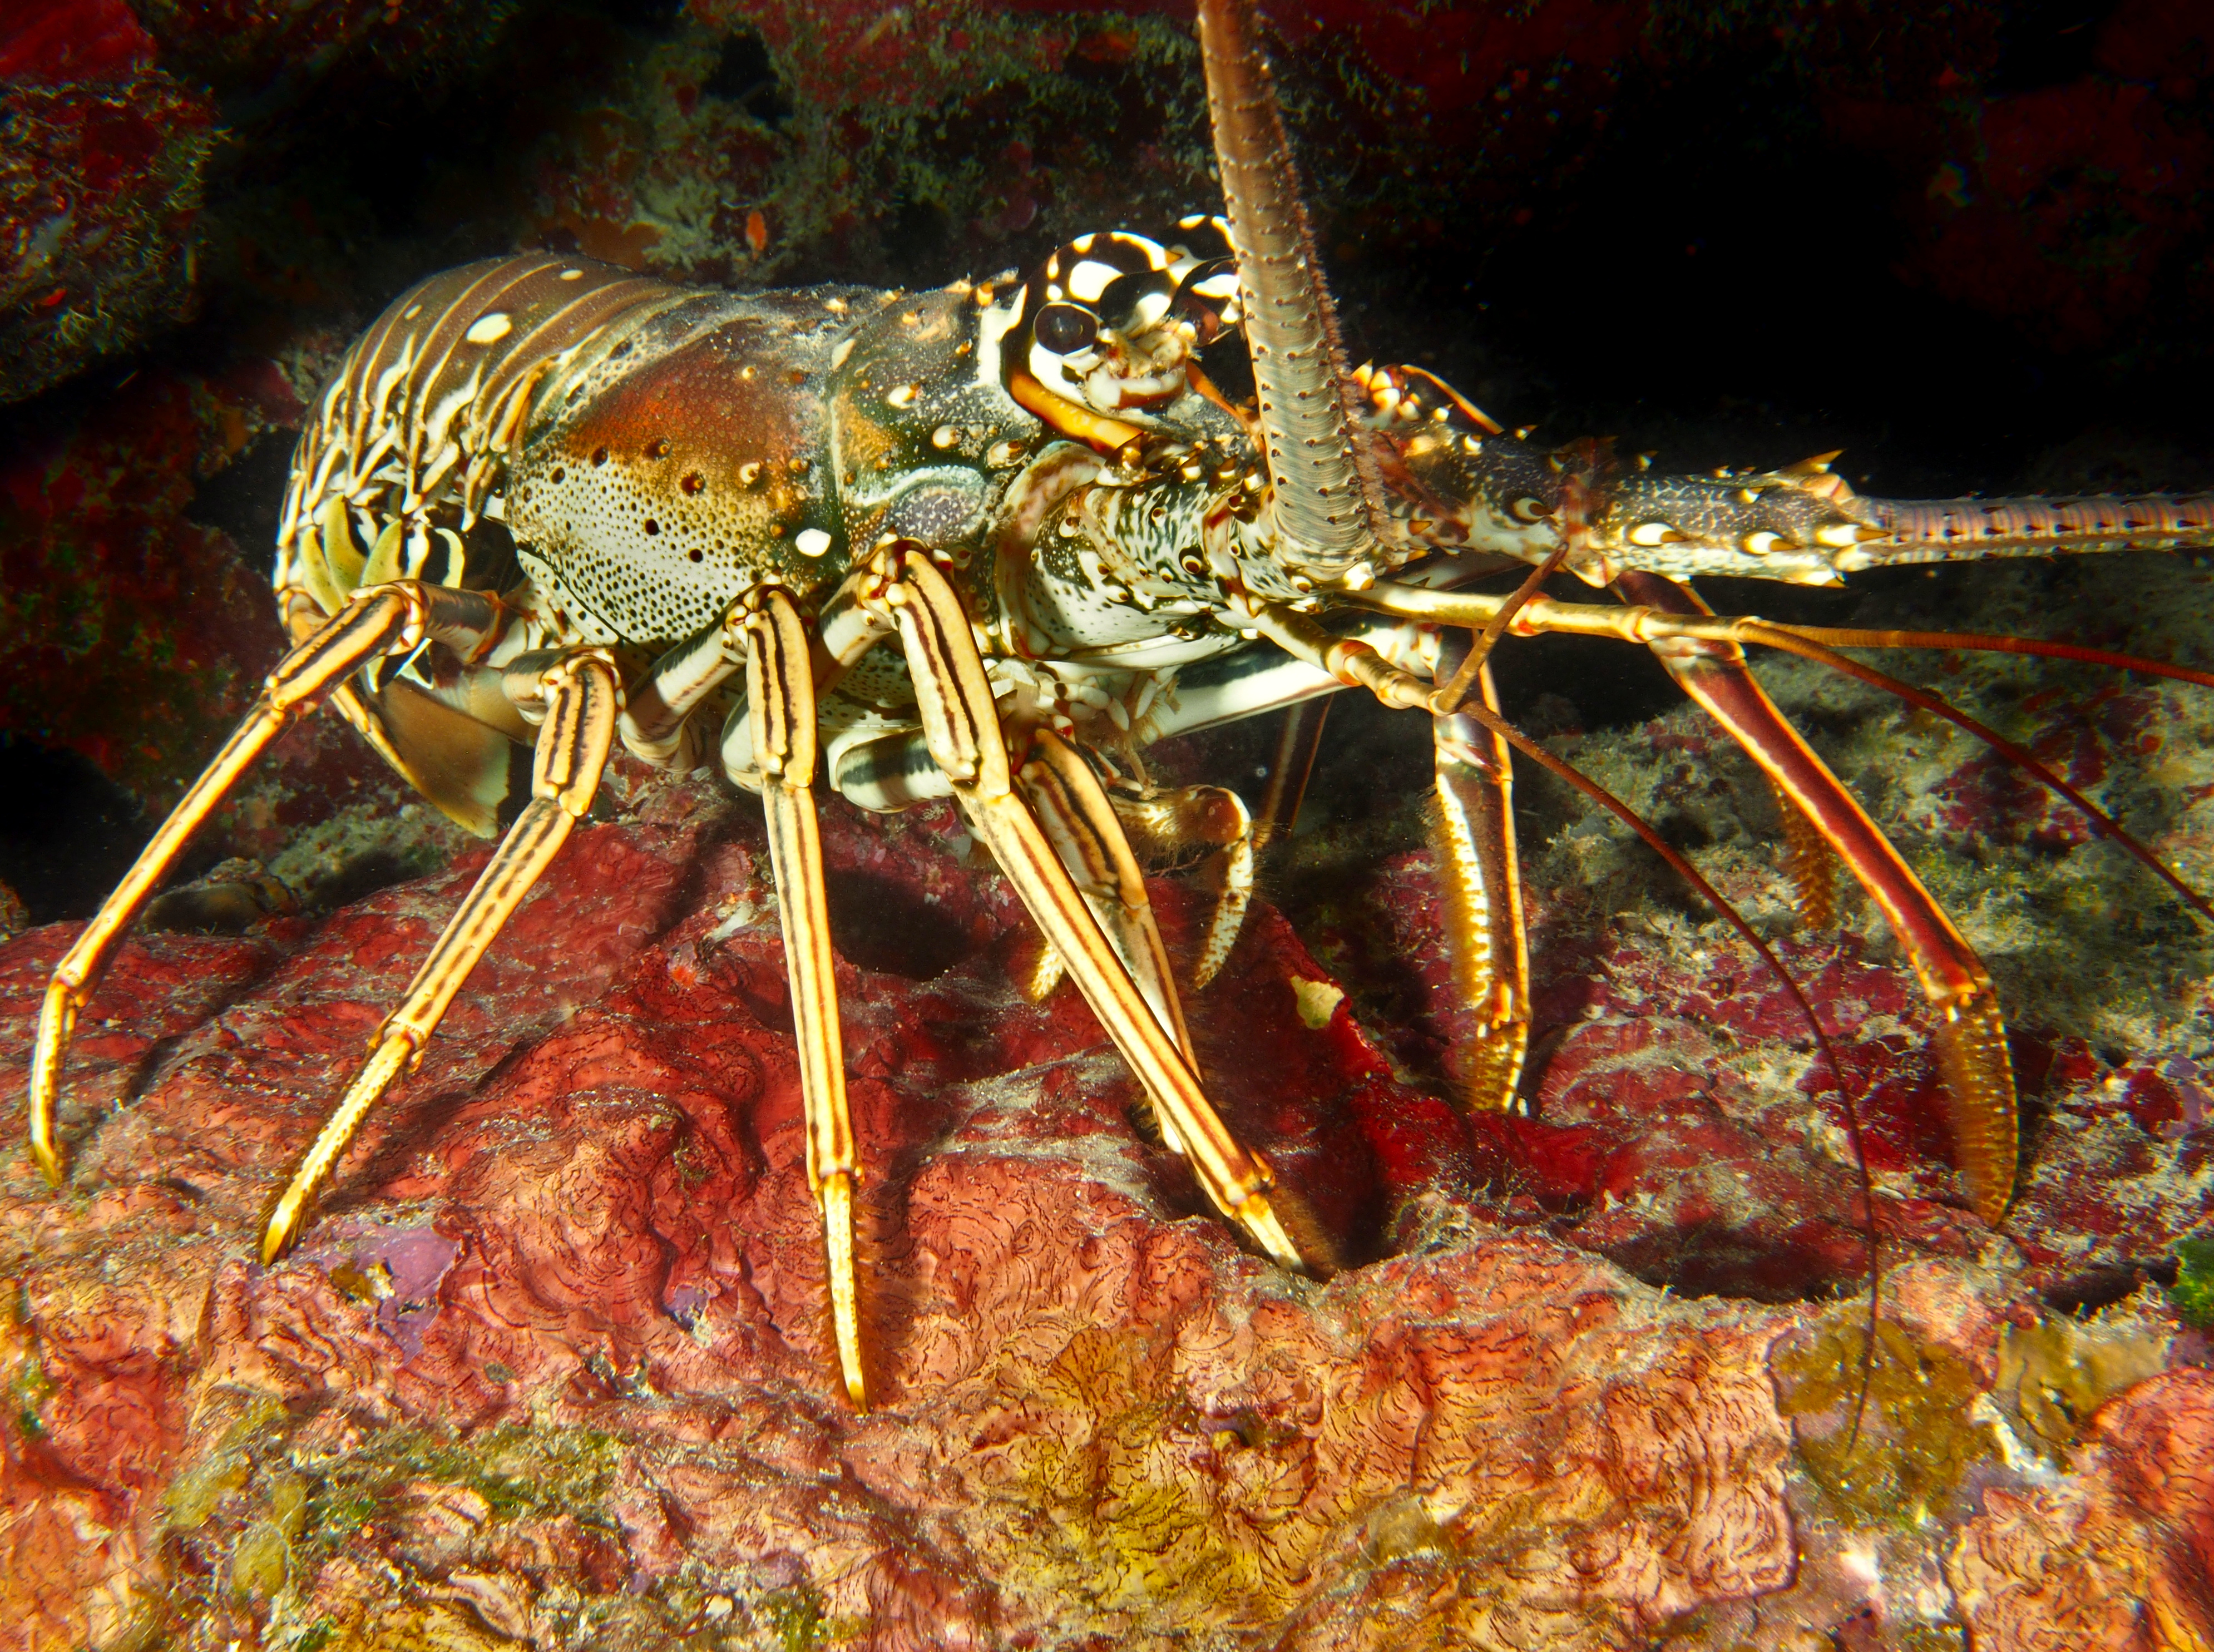 Caribbean Spiny Lobster - Panulirus argus